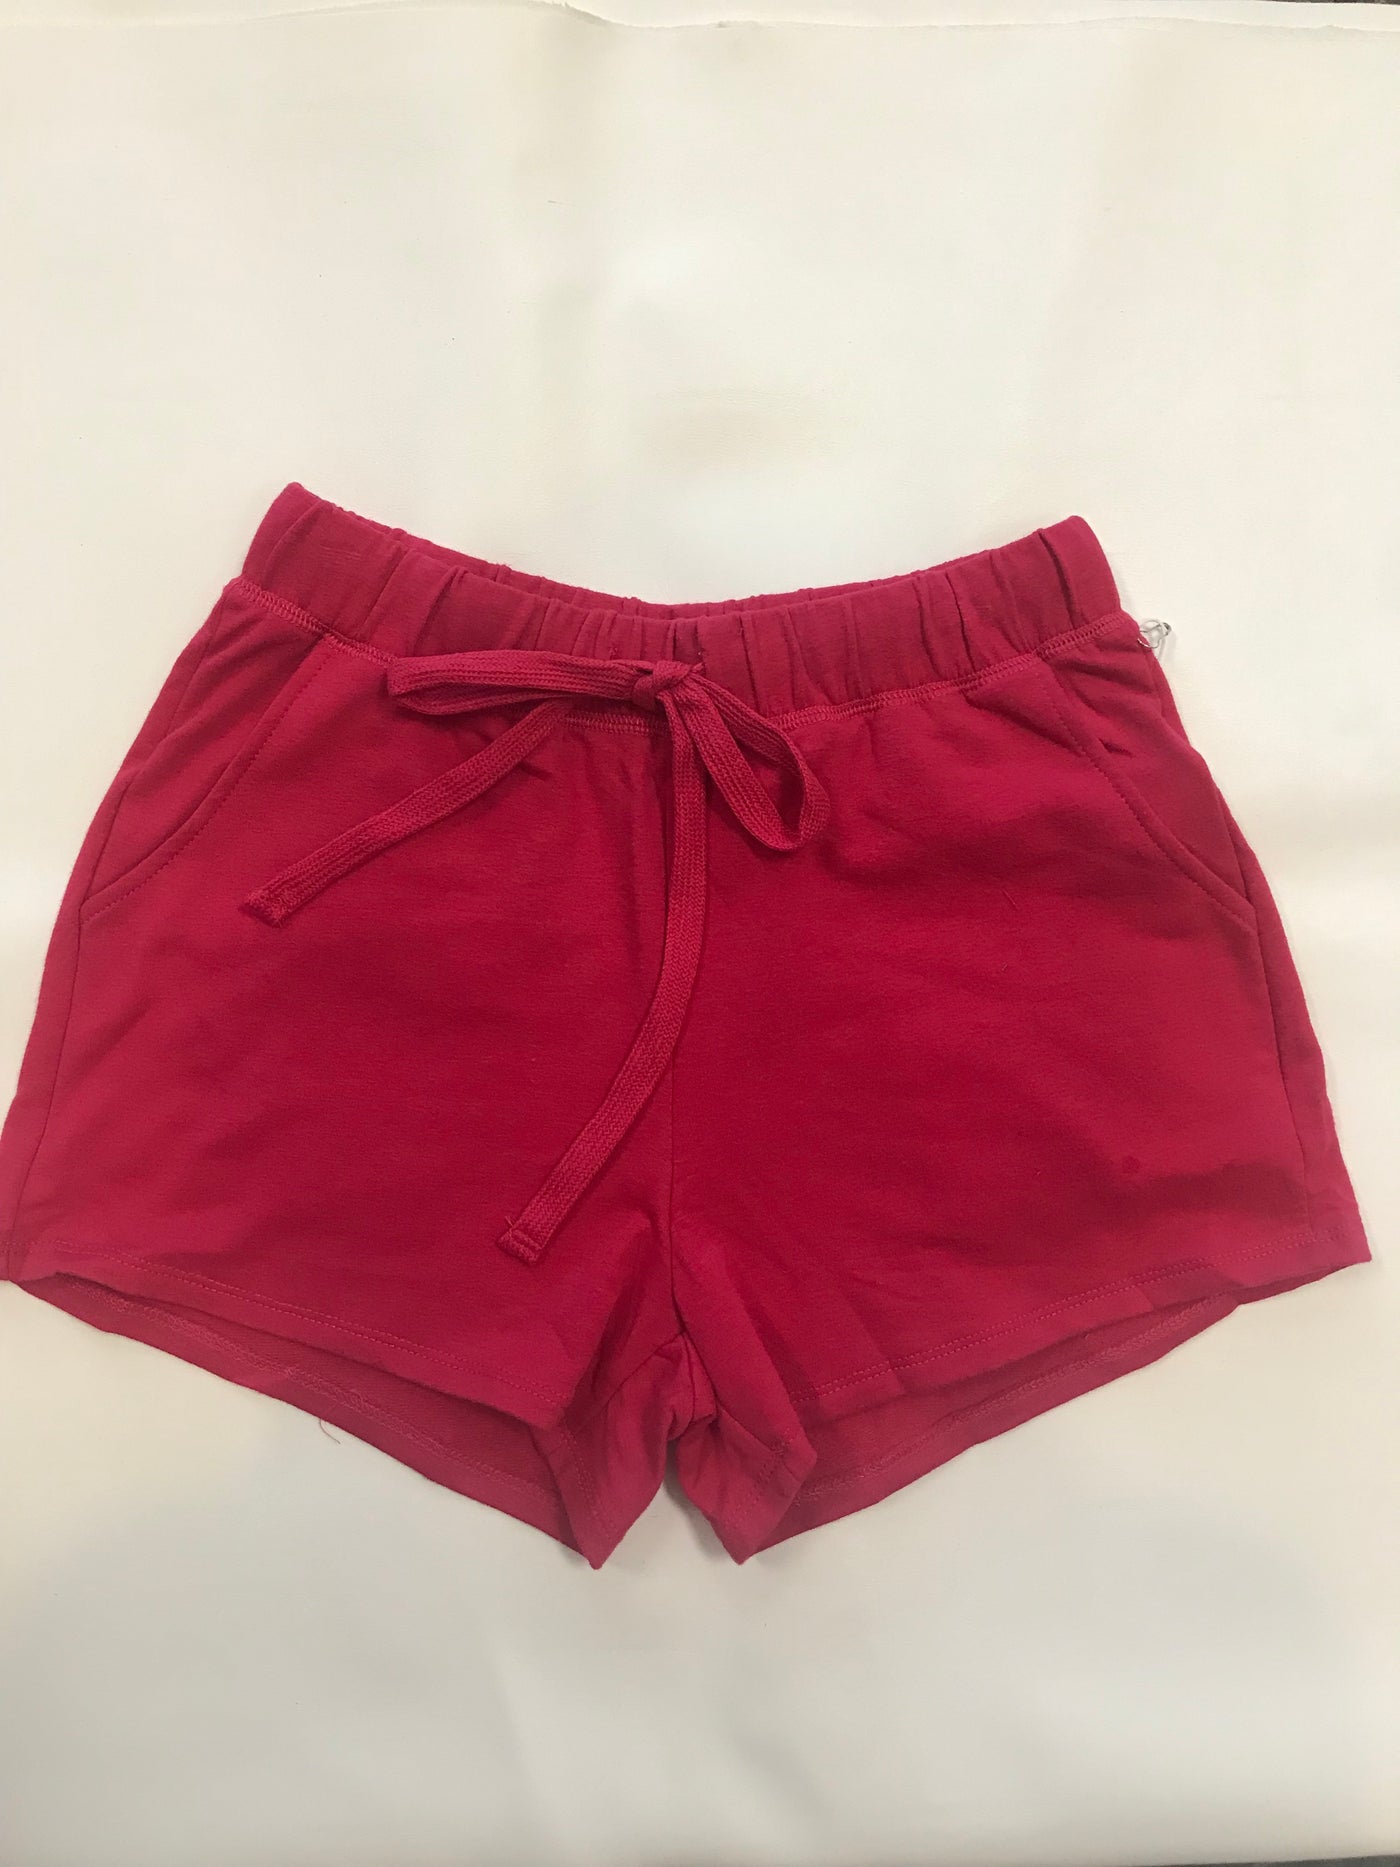 Hot Pink Athletic Shorts